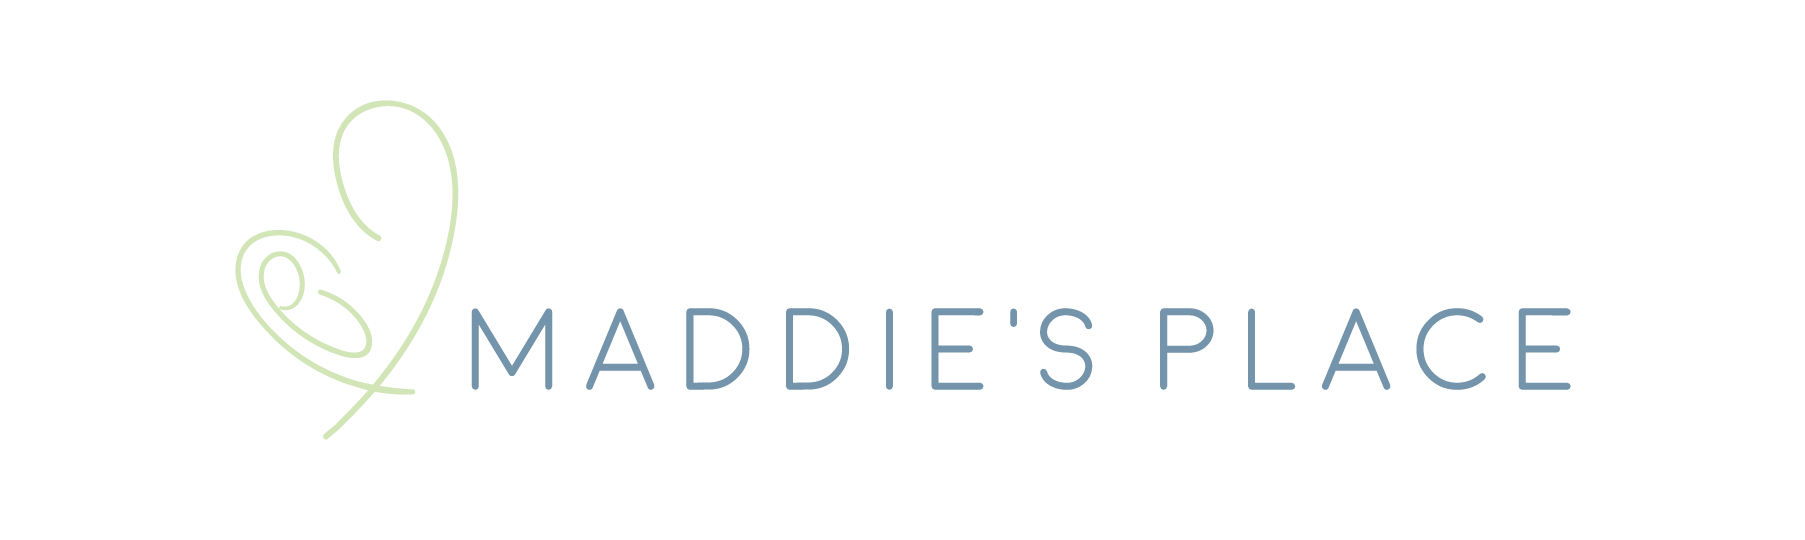 Maddie's Place logo